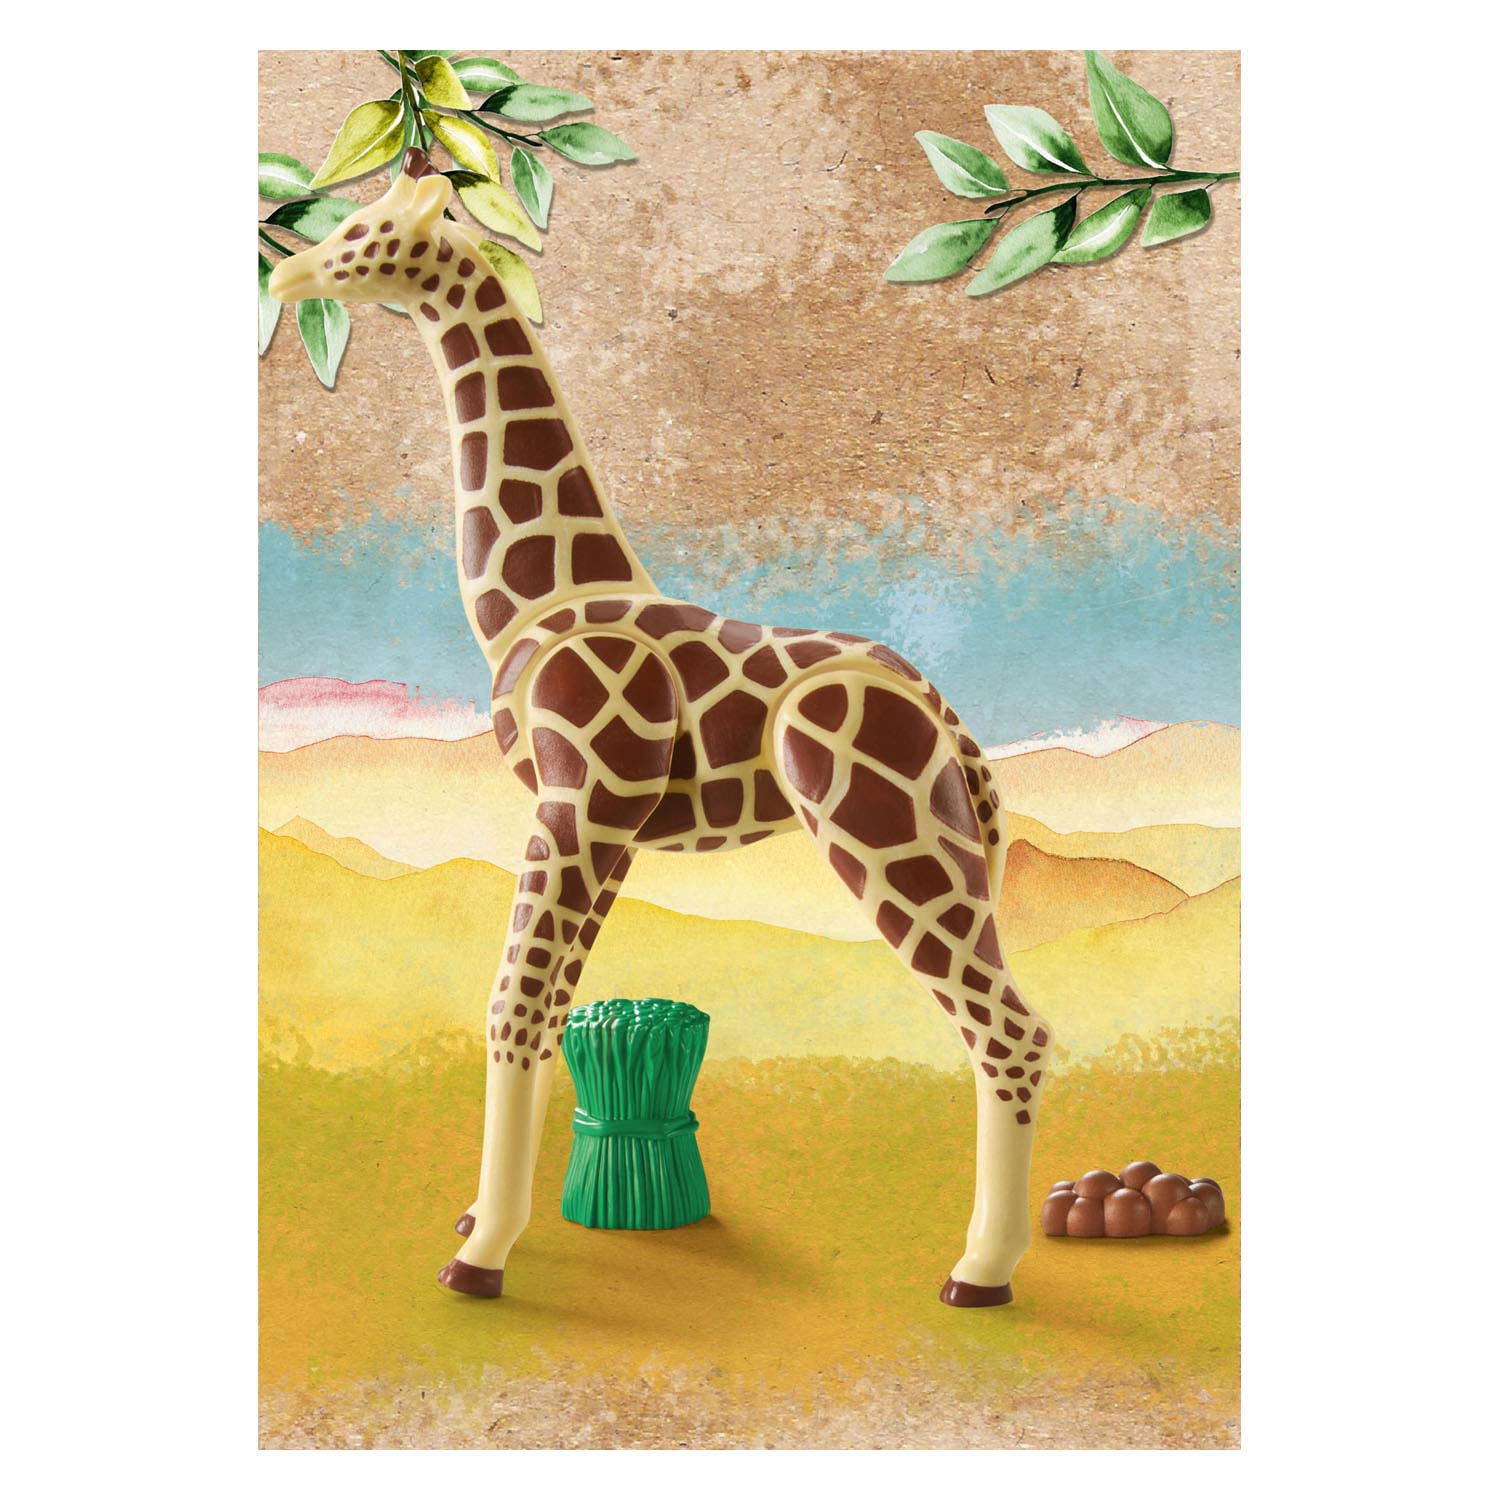 Playmobil Wiltopa Girafe - 71048